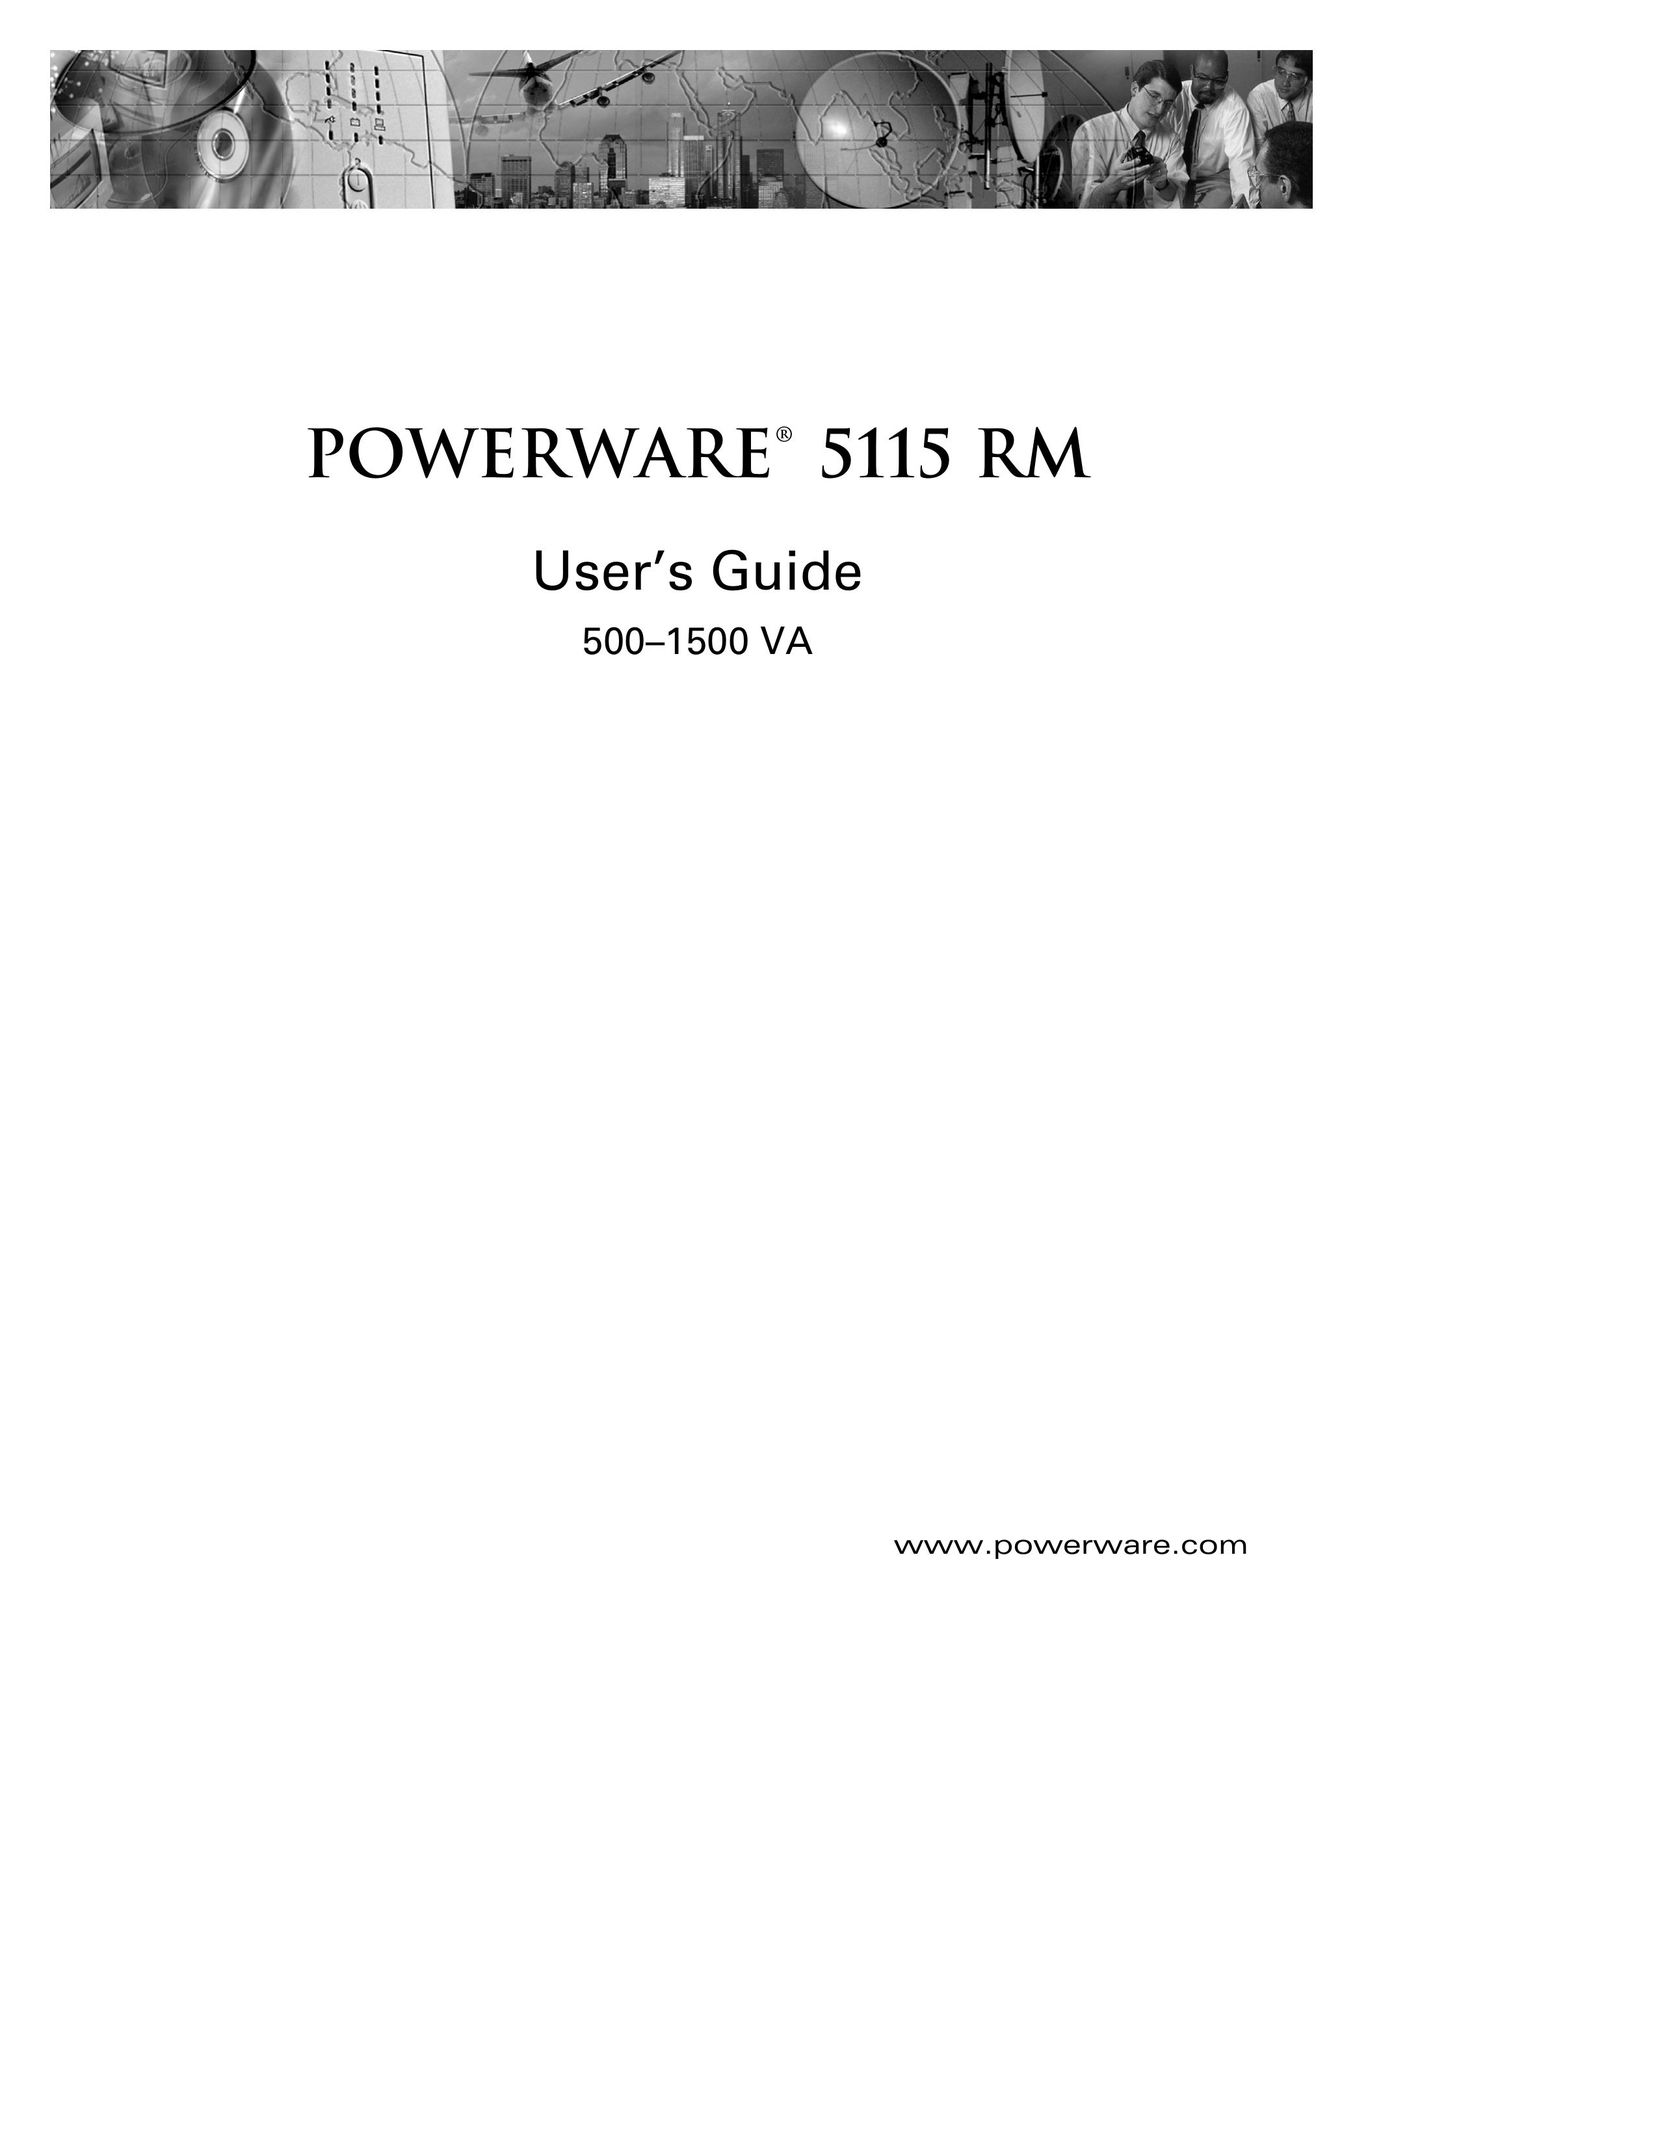 Powerware 5115 RM Power Supply User Manual